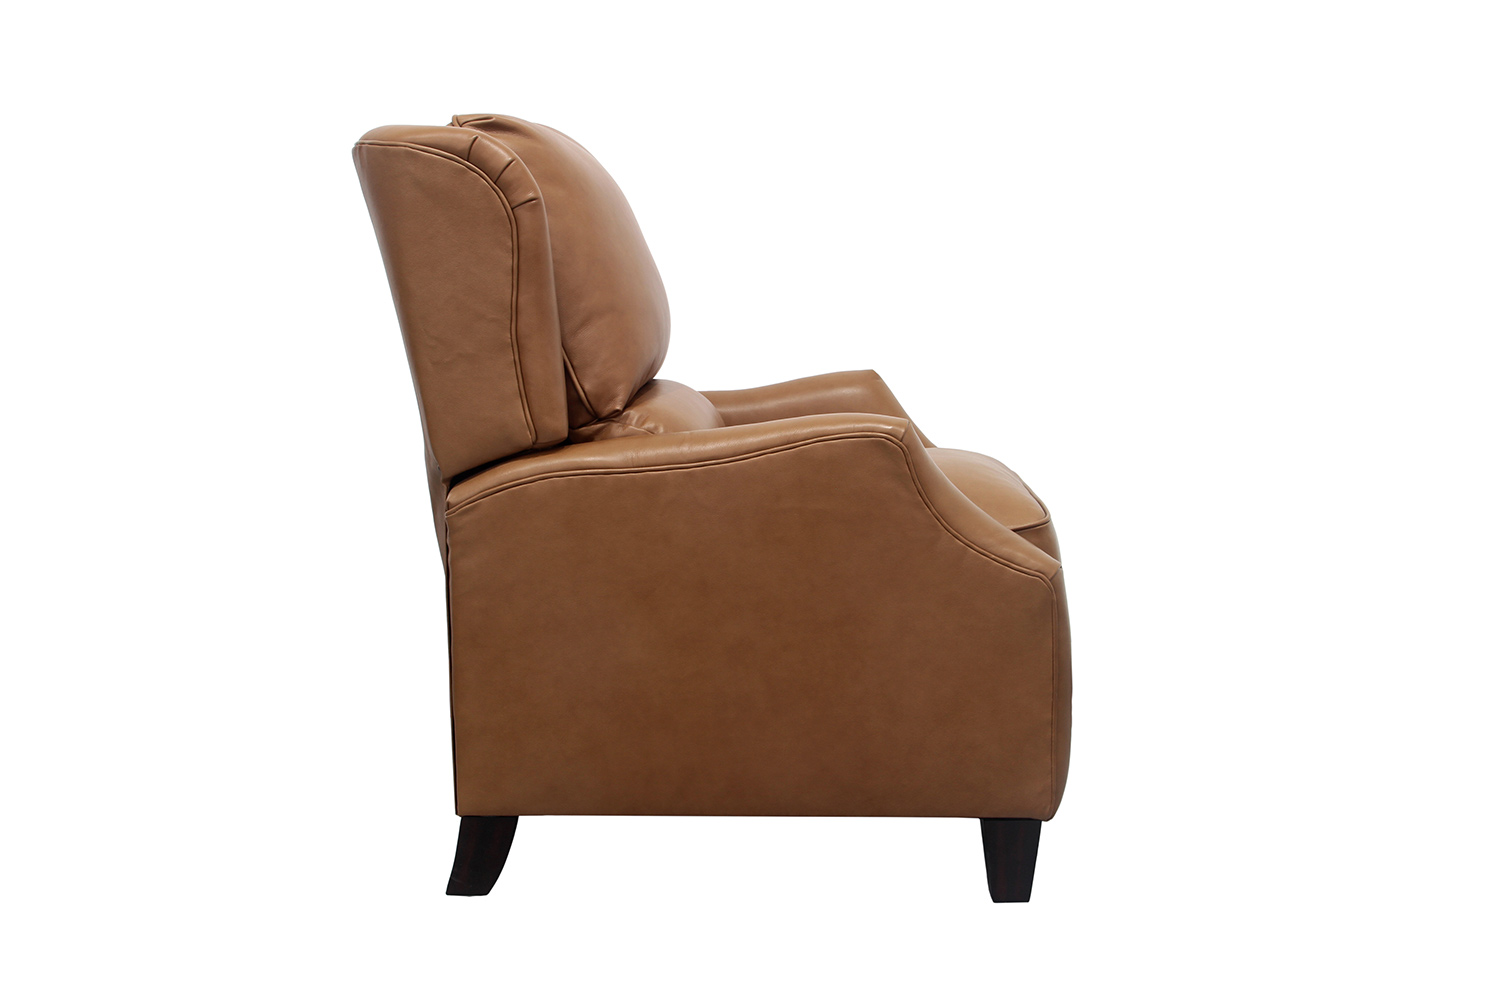 Barcalounger Berkeley Recliner Chair - Shoreham Ponytail/All Leather